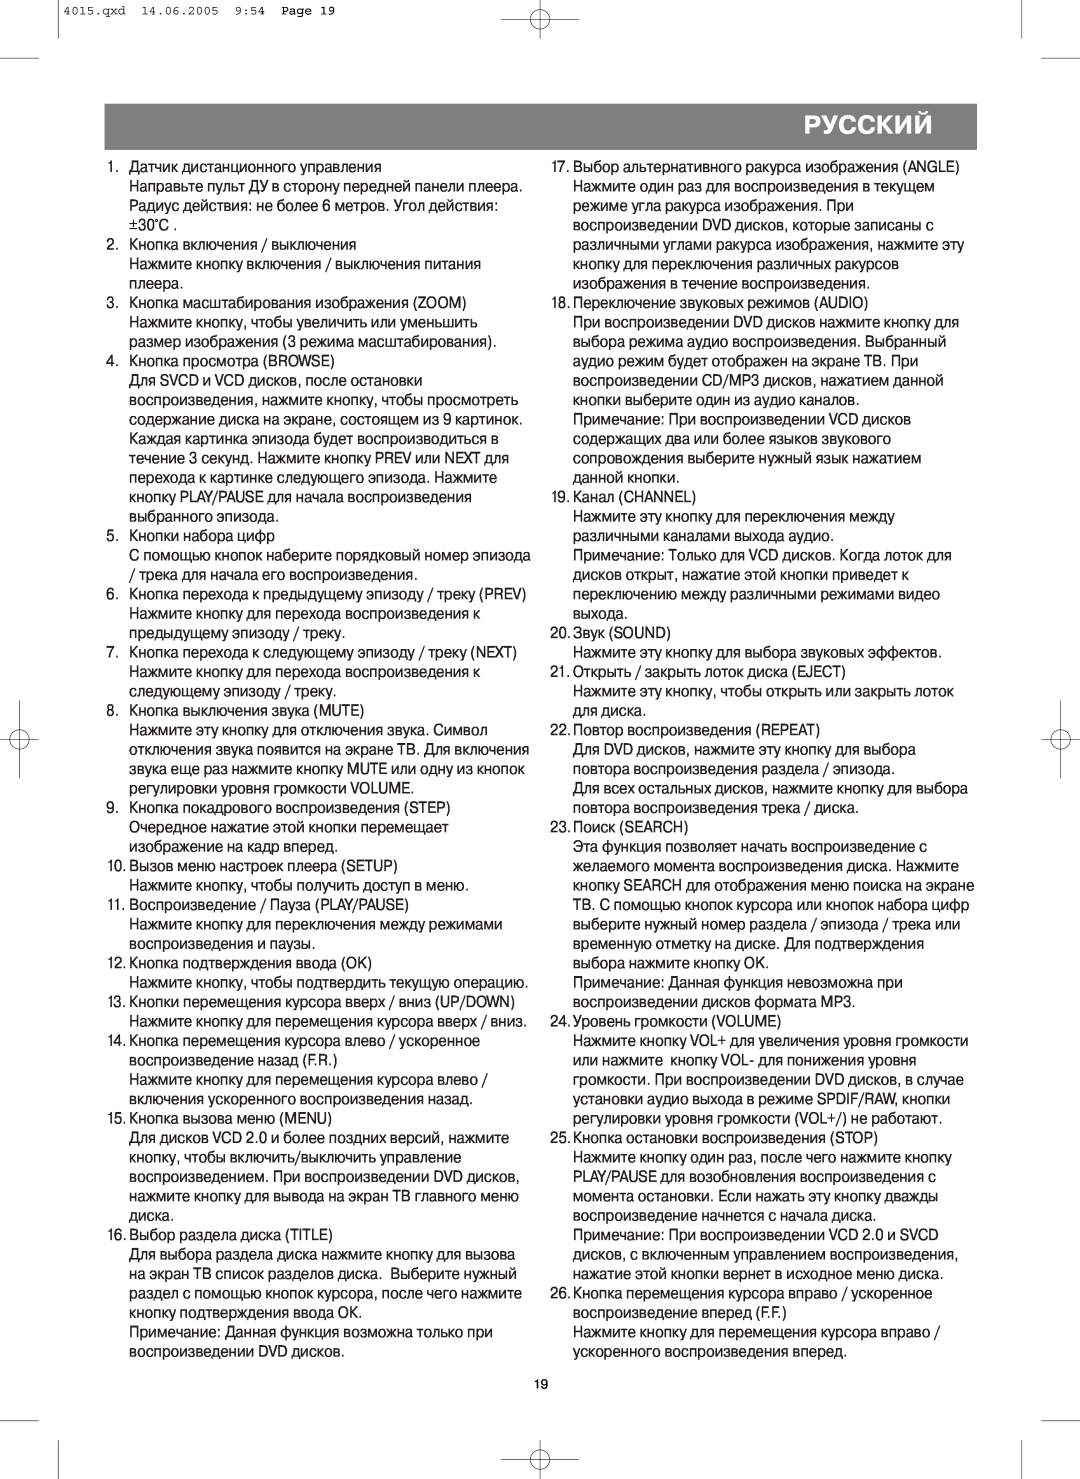 LG Electronics VT 4015 instruction manual Русский 